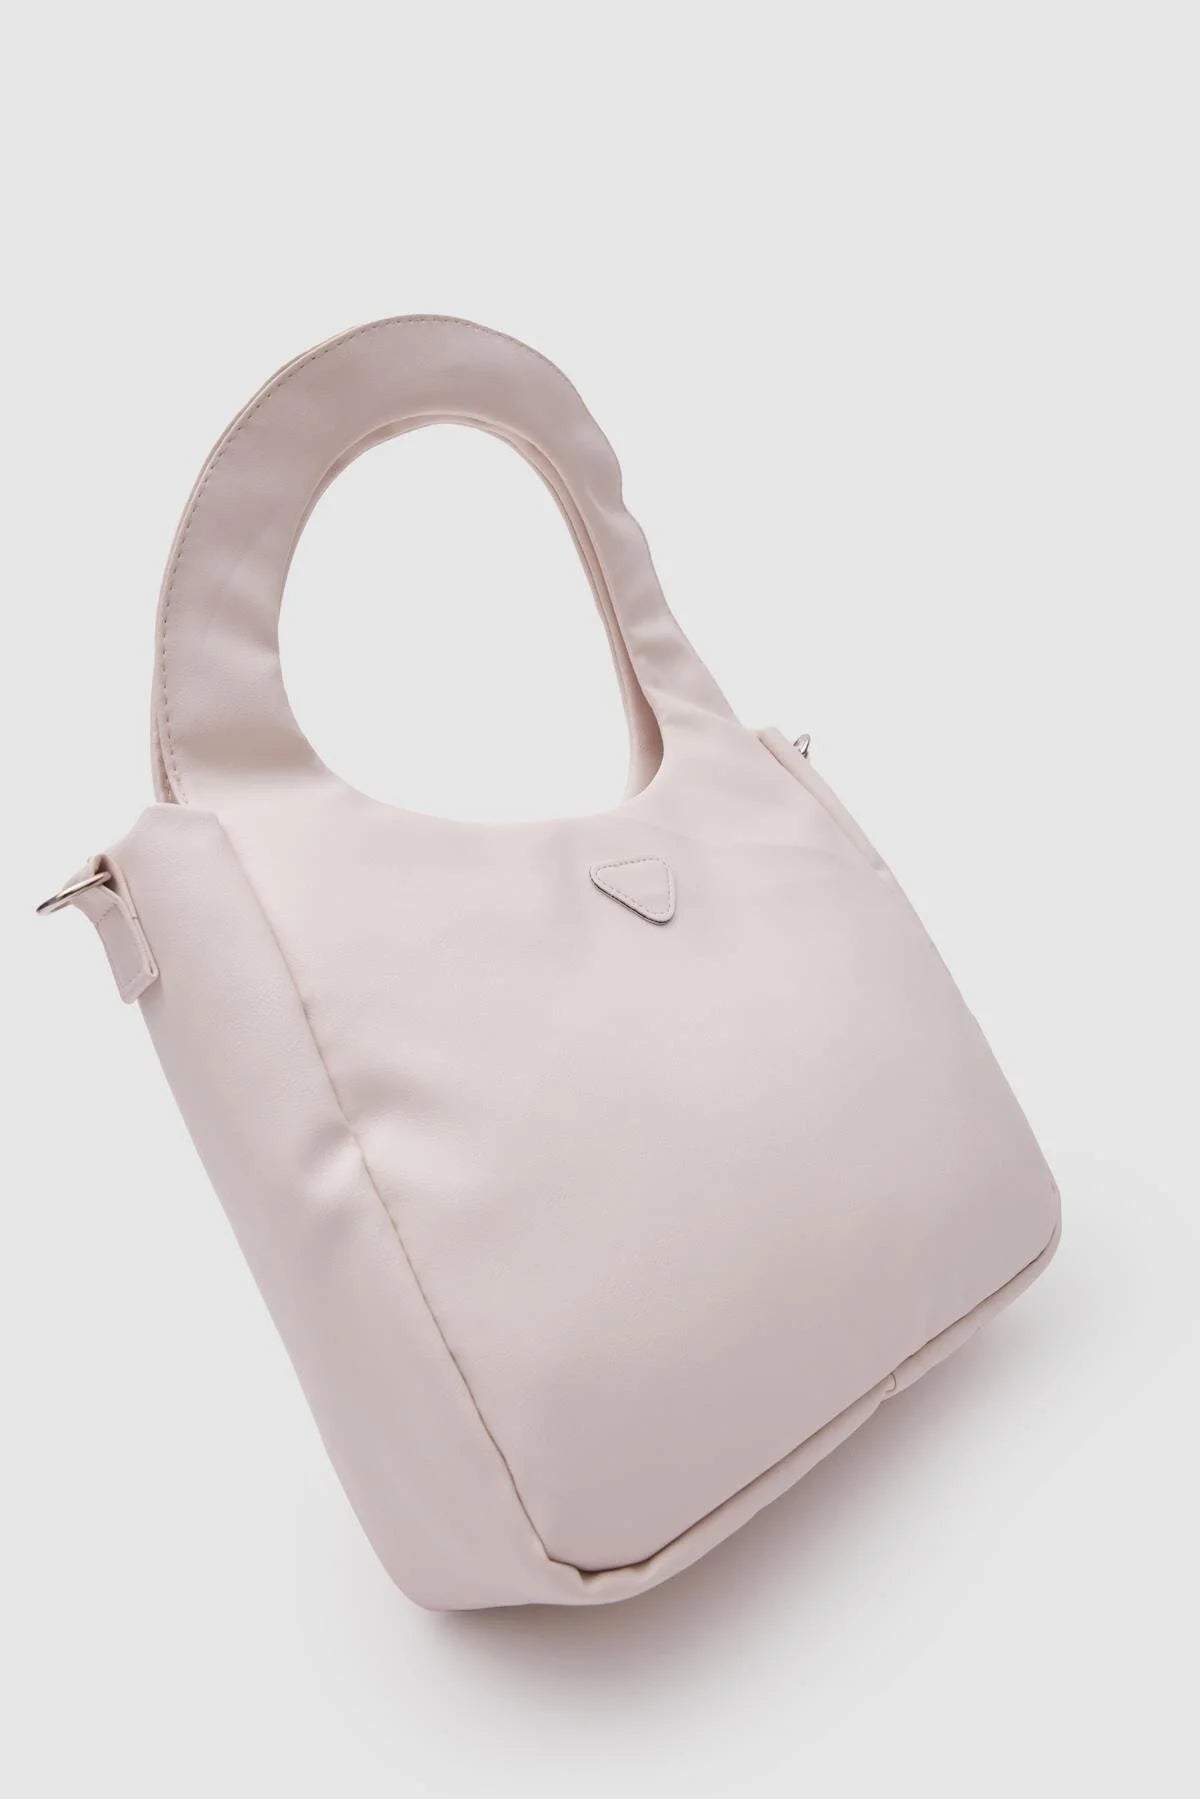 Faux Leather Oval Cream Tote Bag Tiger bag LUNARITY GARAGE   